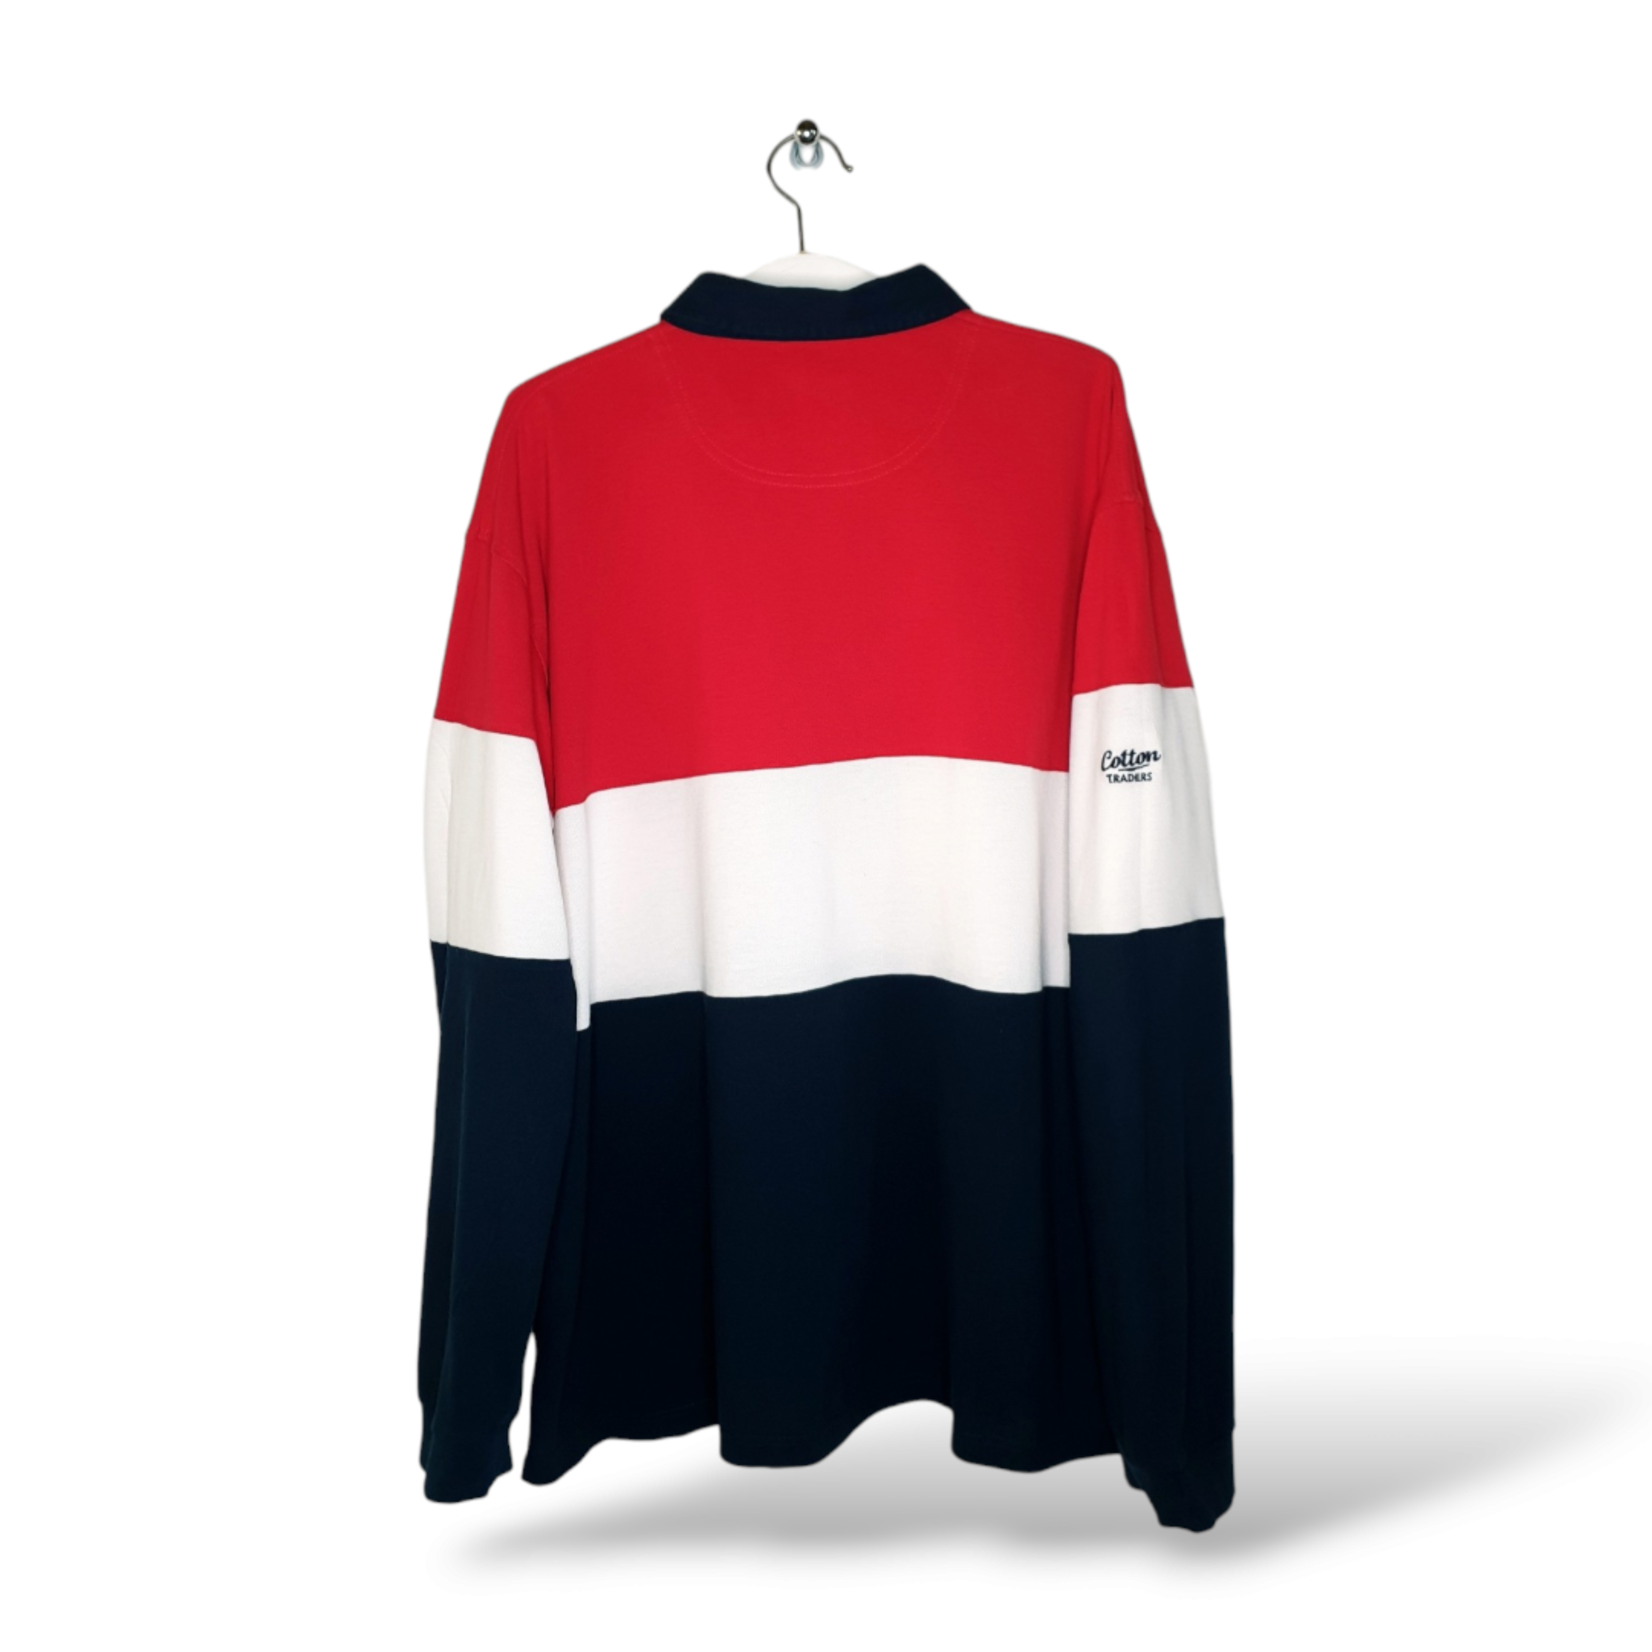 Cotton Traders Origineel Cotton Traders vintage rugby sweater Engeland